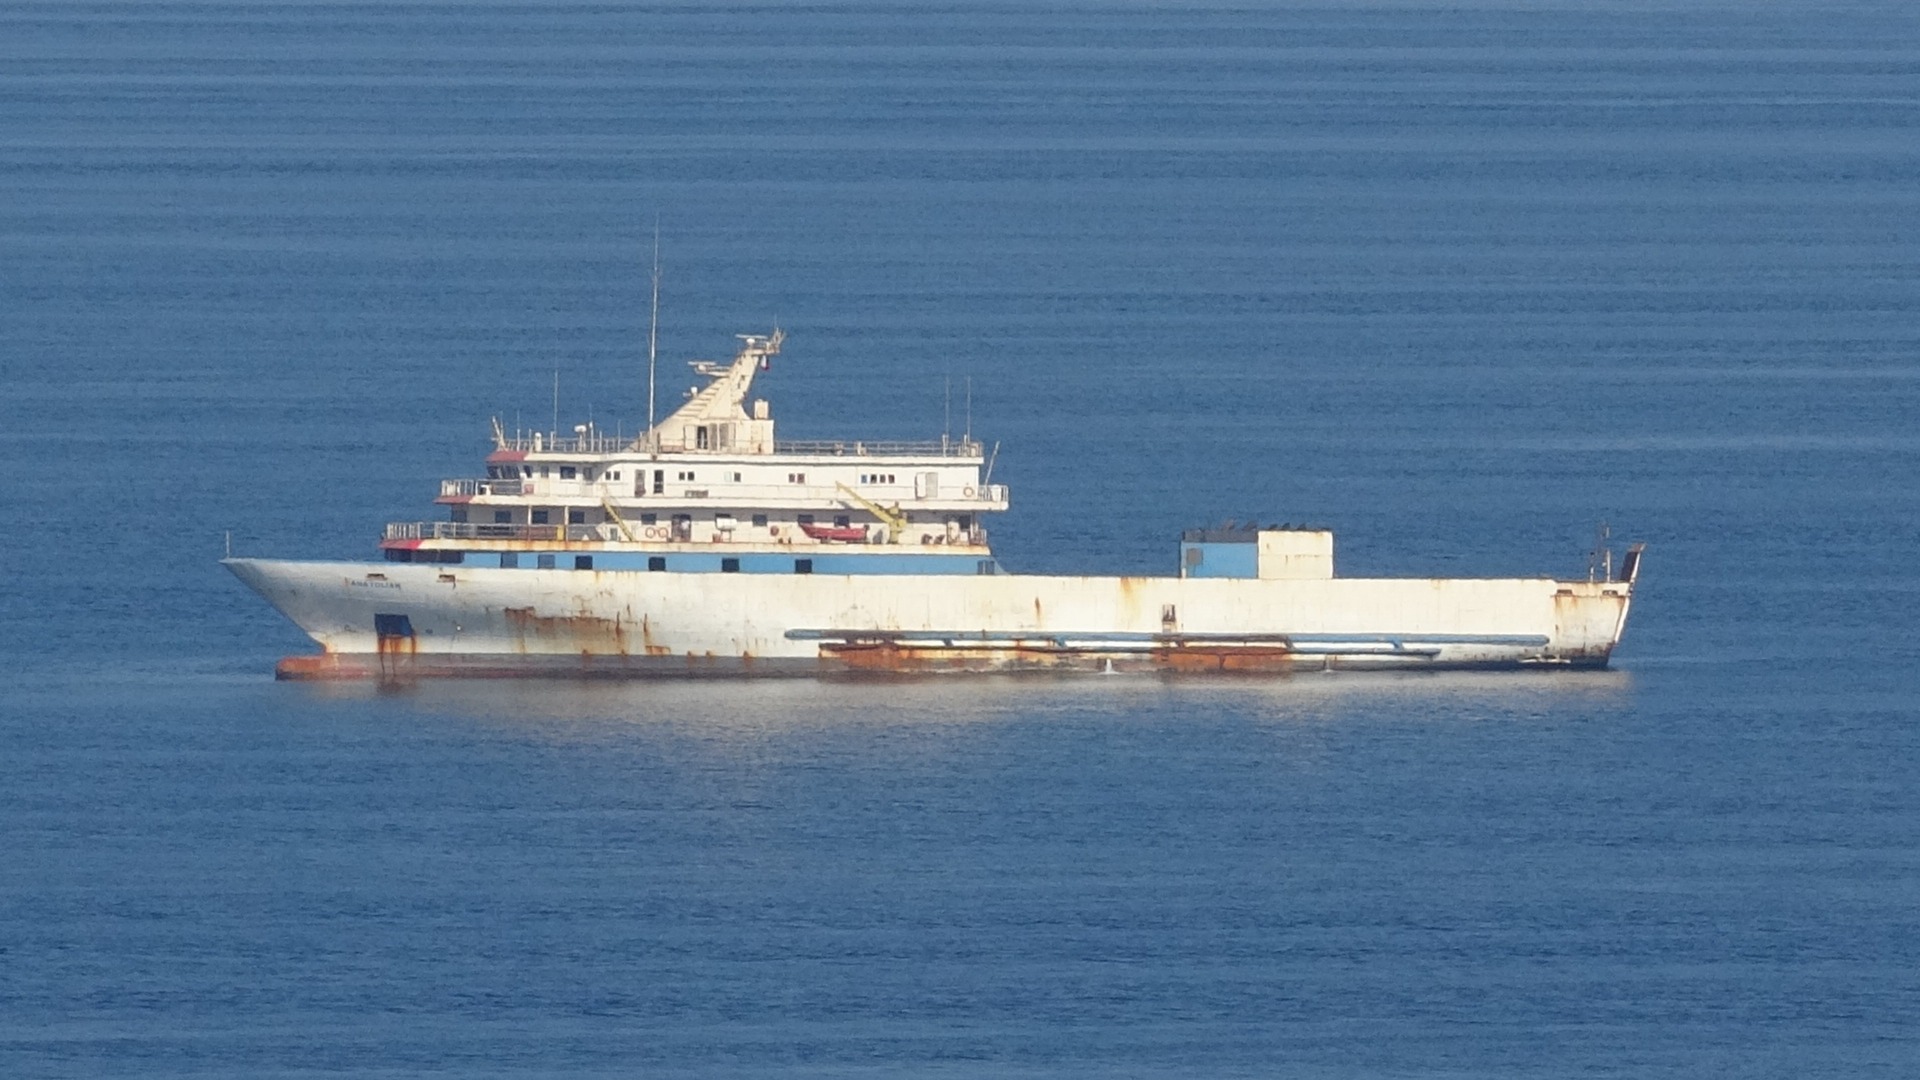 Yunanistan'ın saldırdığı gemi Mavi Marmara çıktı 3